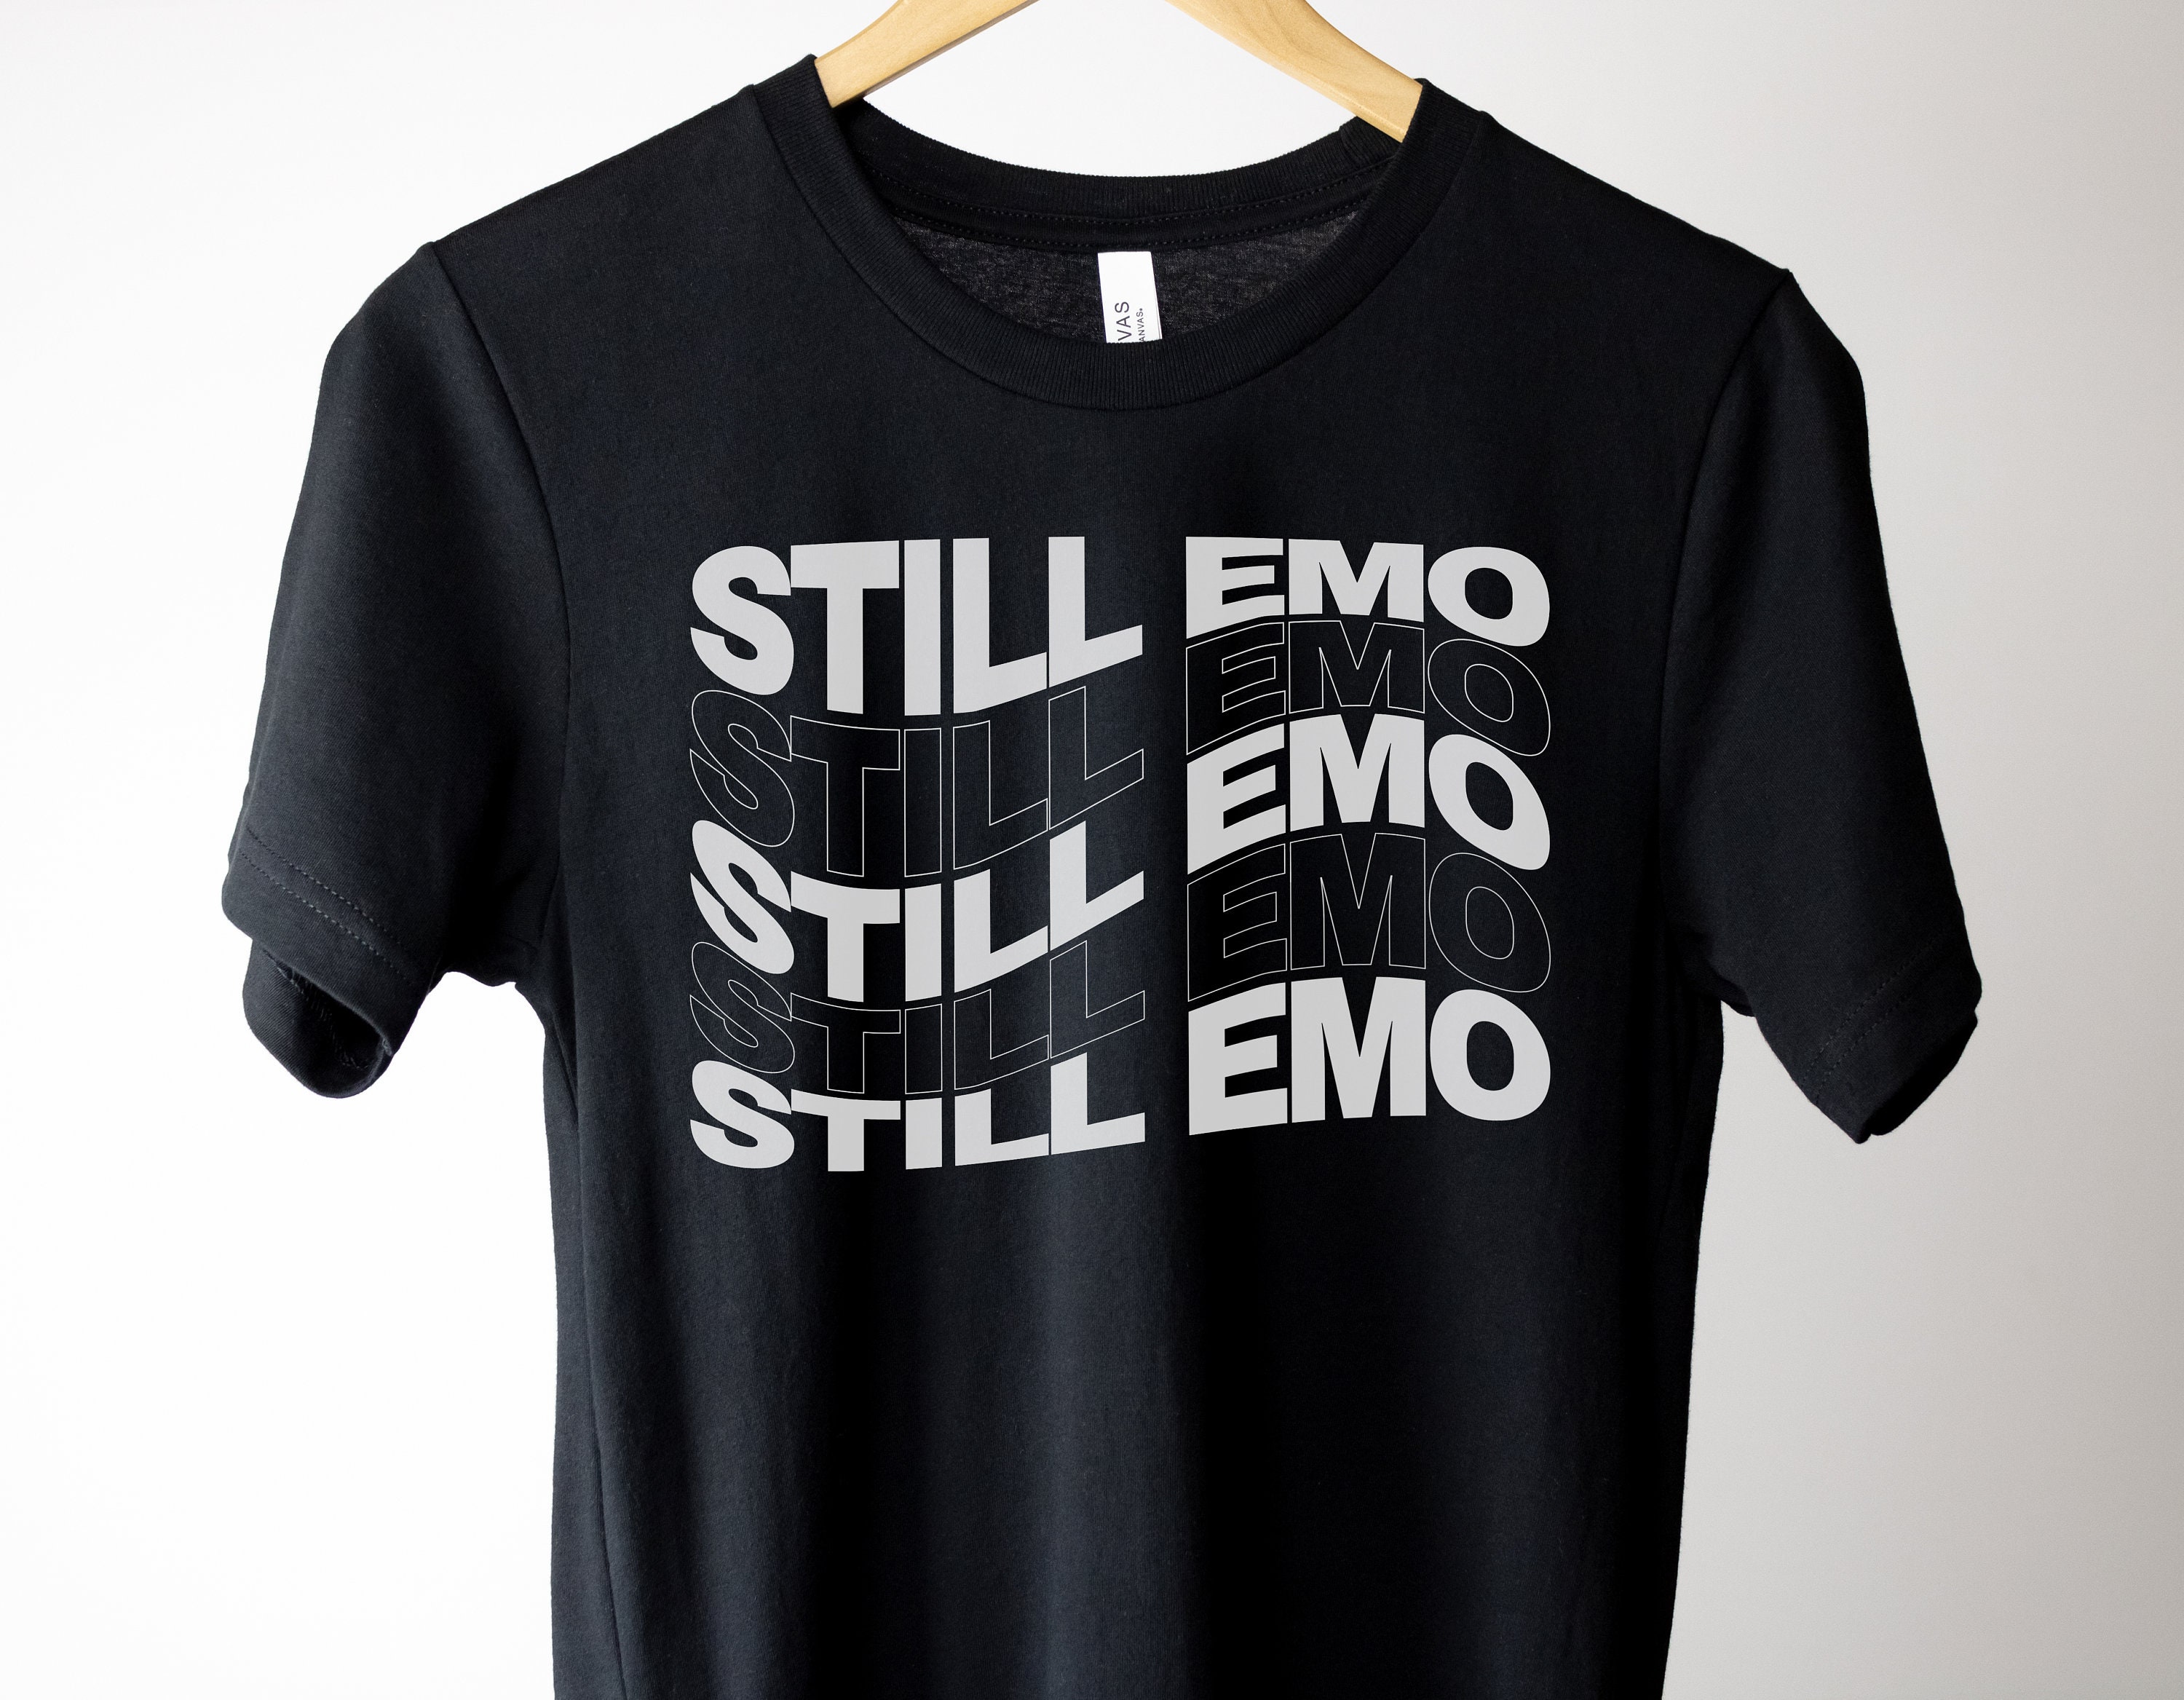 Emo T-Shirts